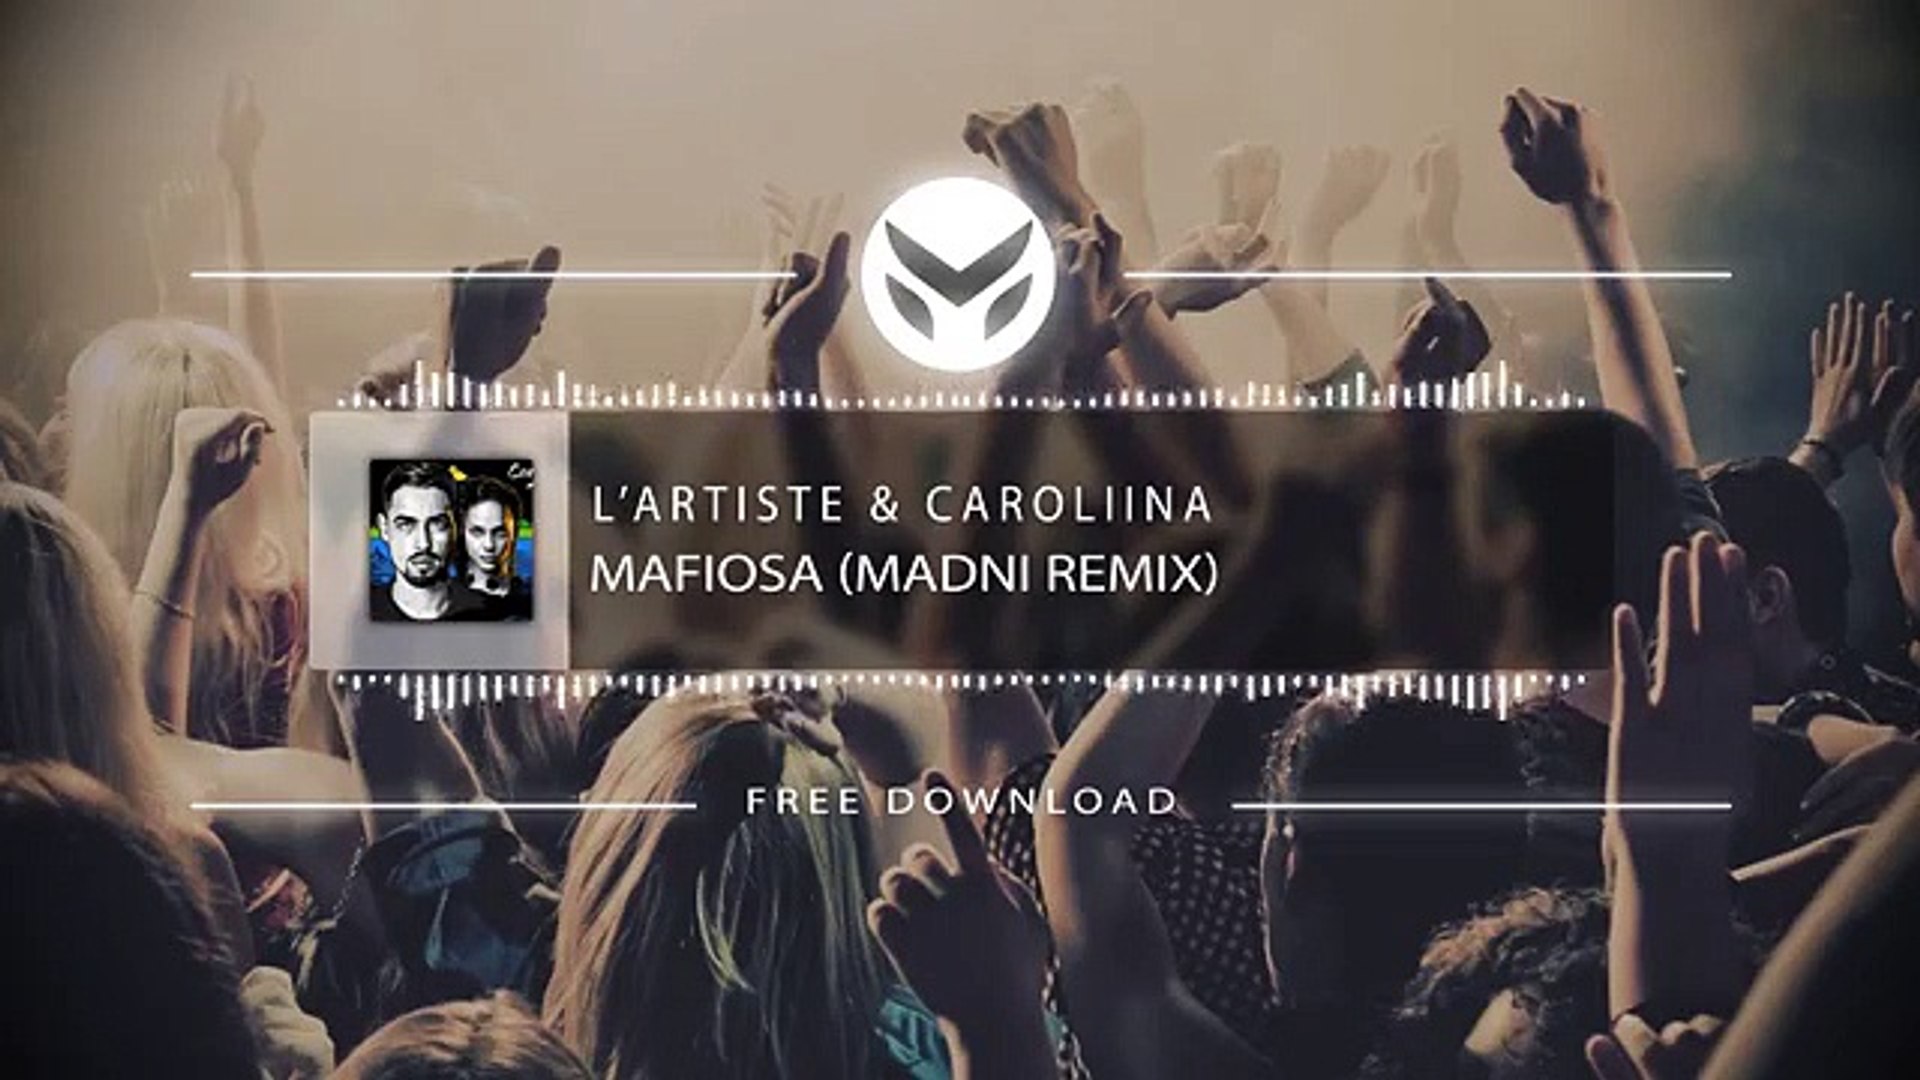 Lartiste & Caroliina - Mafiosa (Madni Remix) - Vidéo Dailymotion